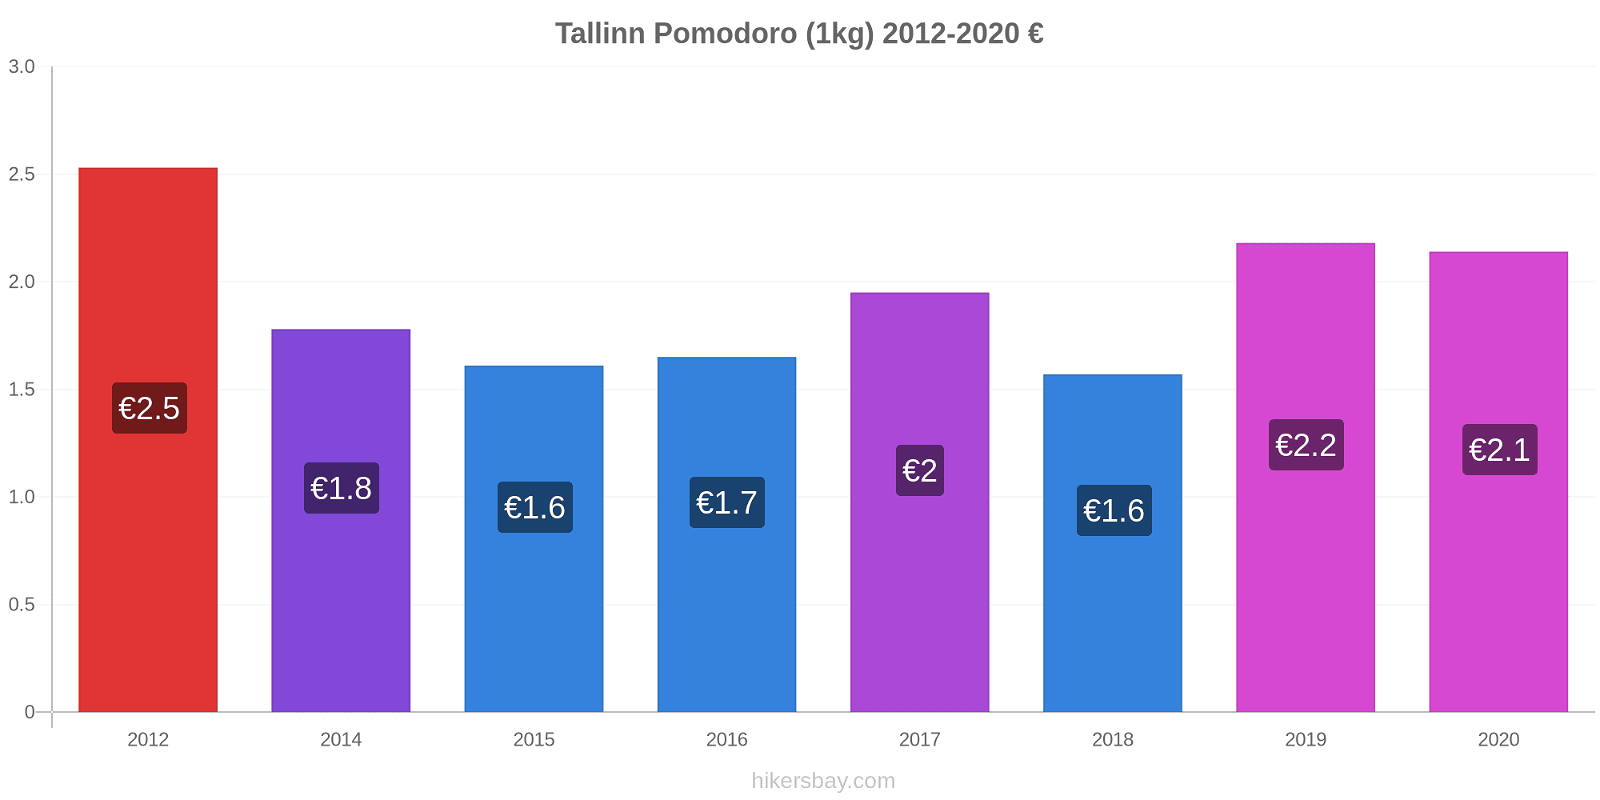 Tallinn variazioni di prezzo Pomodoro (1kg) hikersbay.com